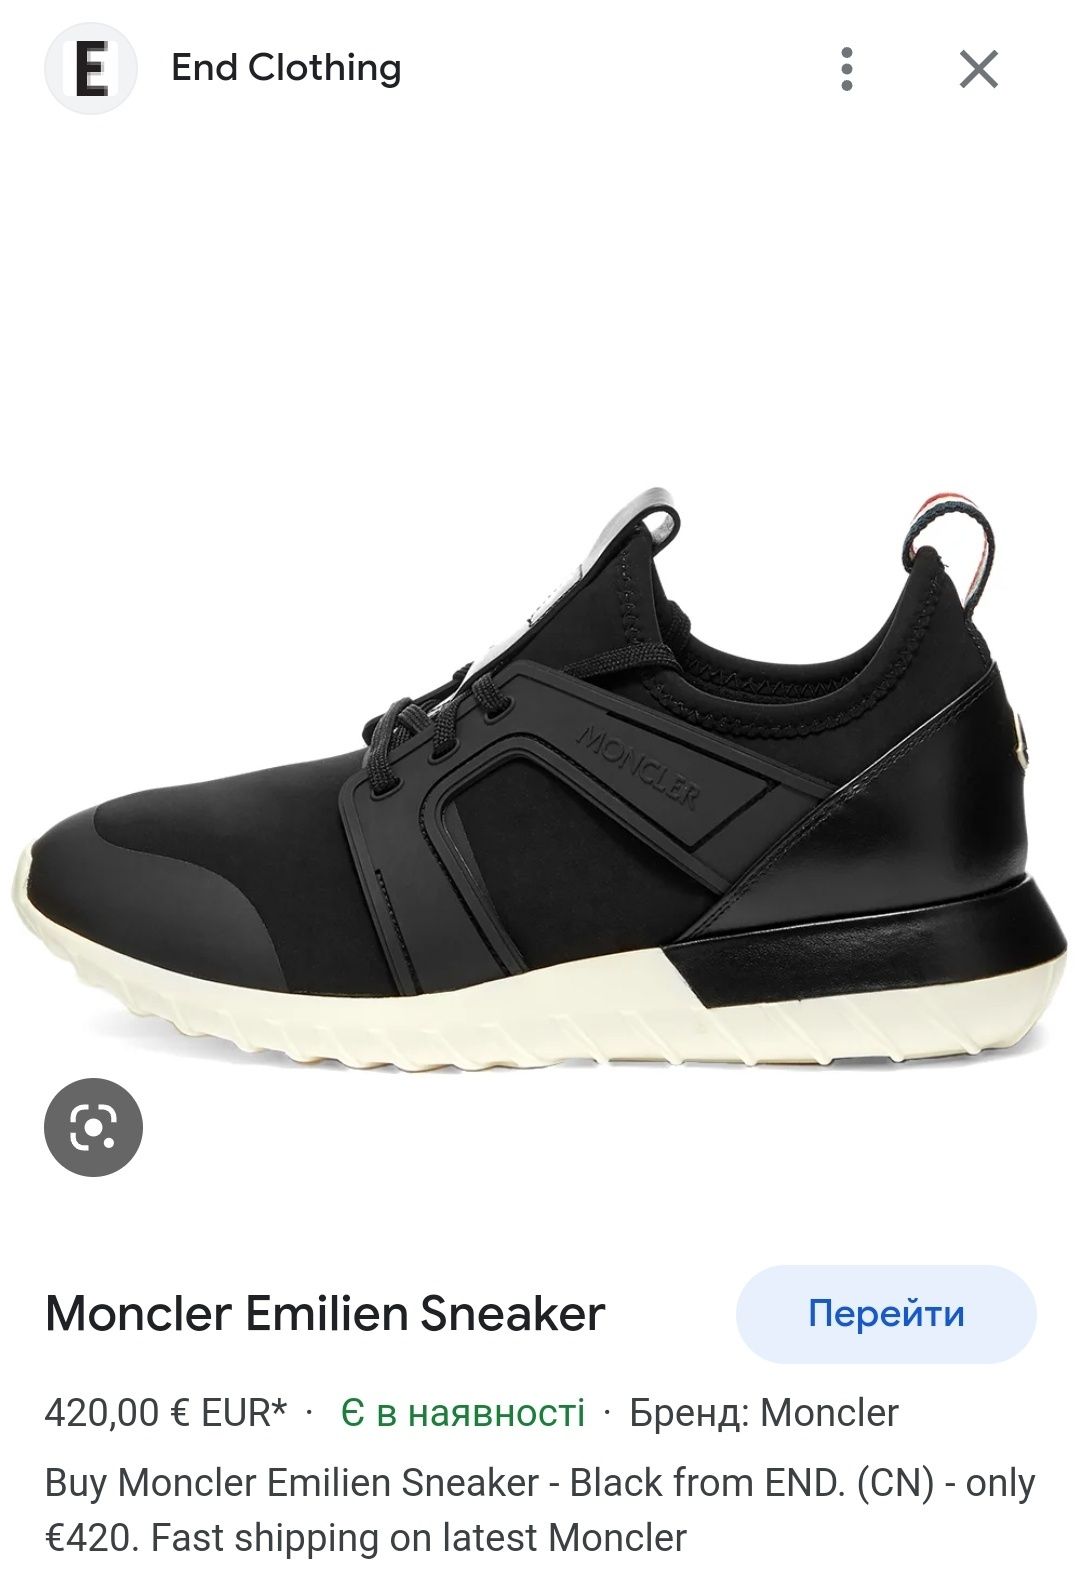 Moncler Emilien Sneaker, 38 размер